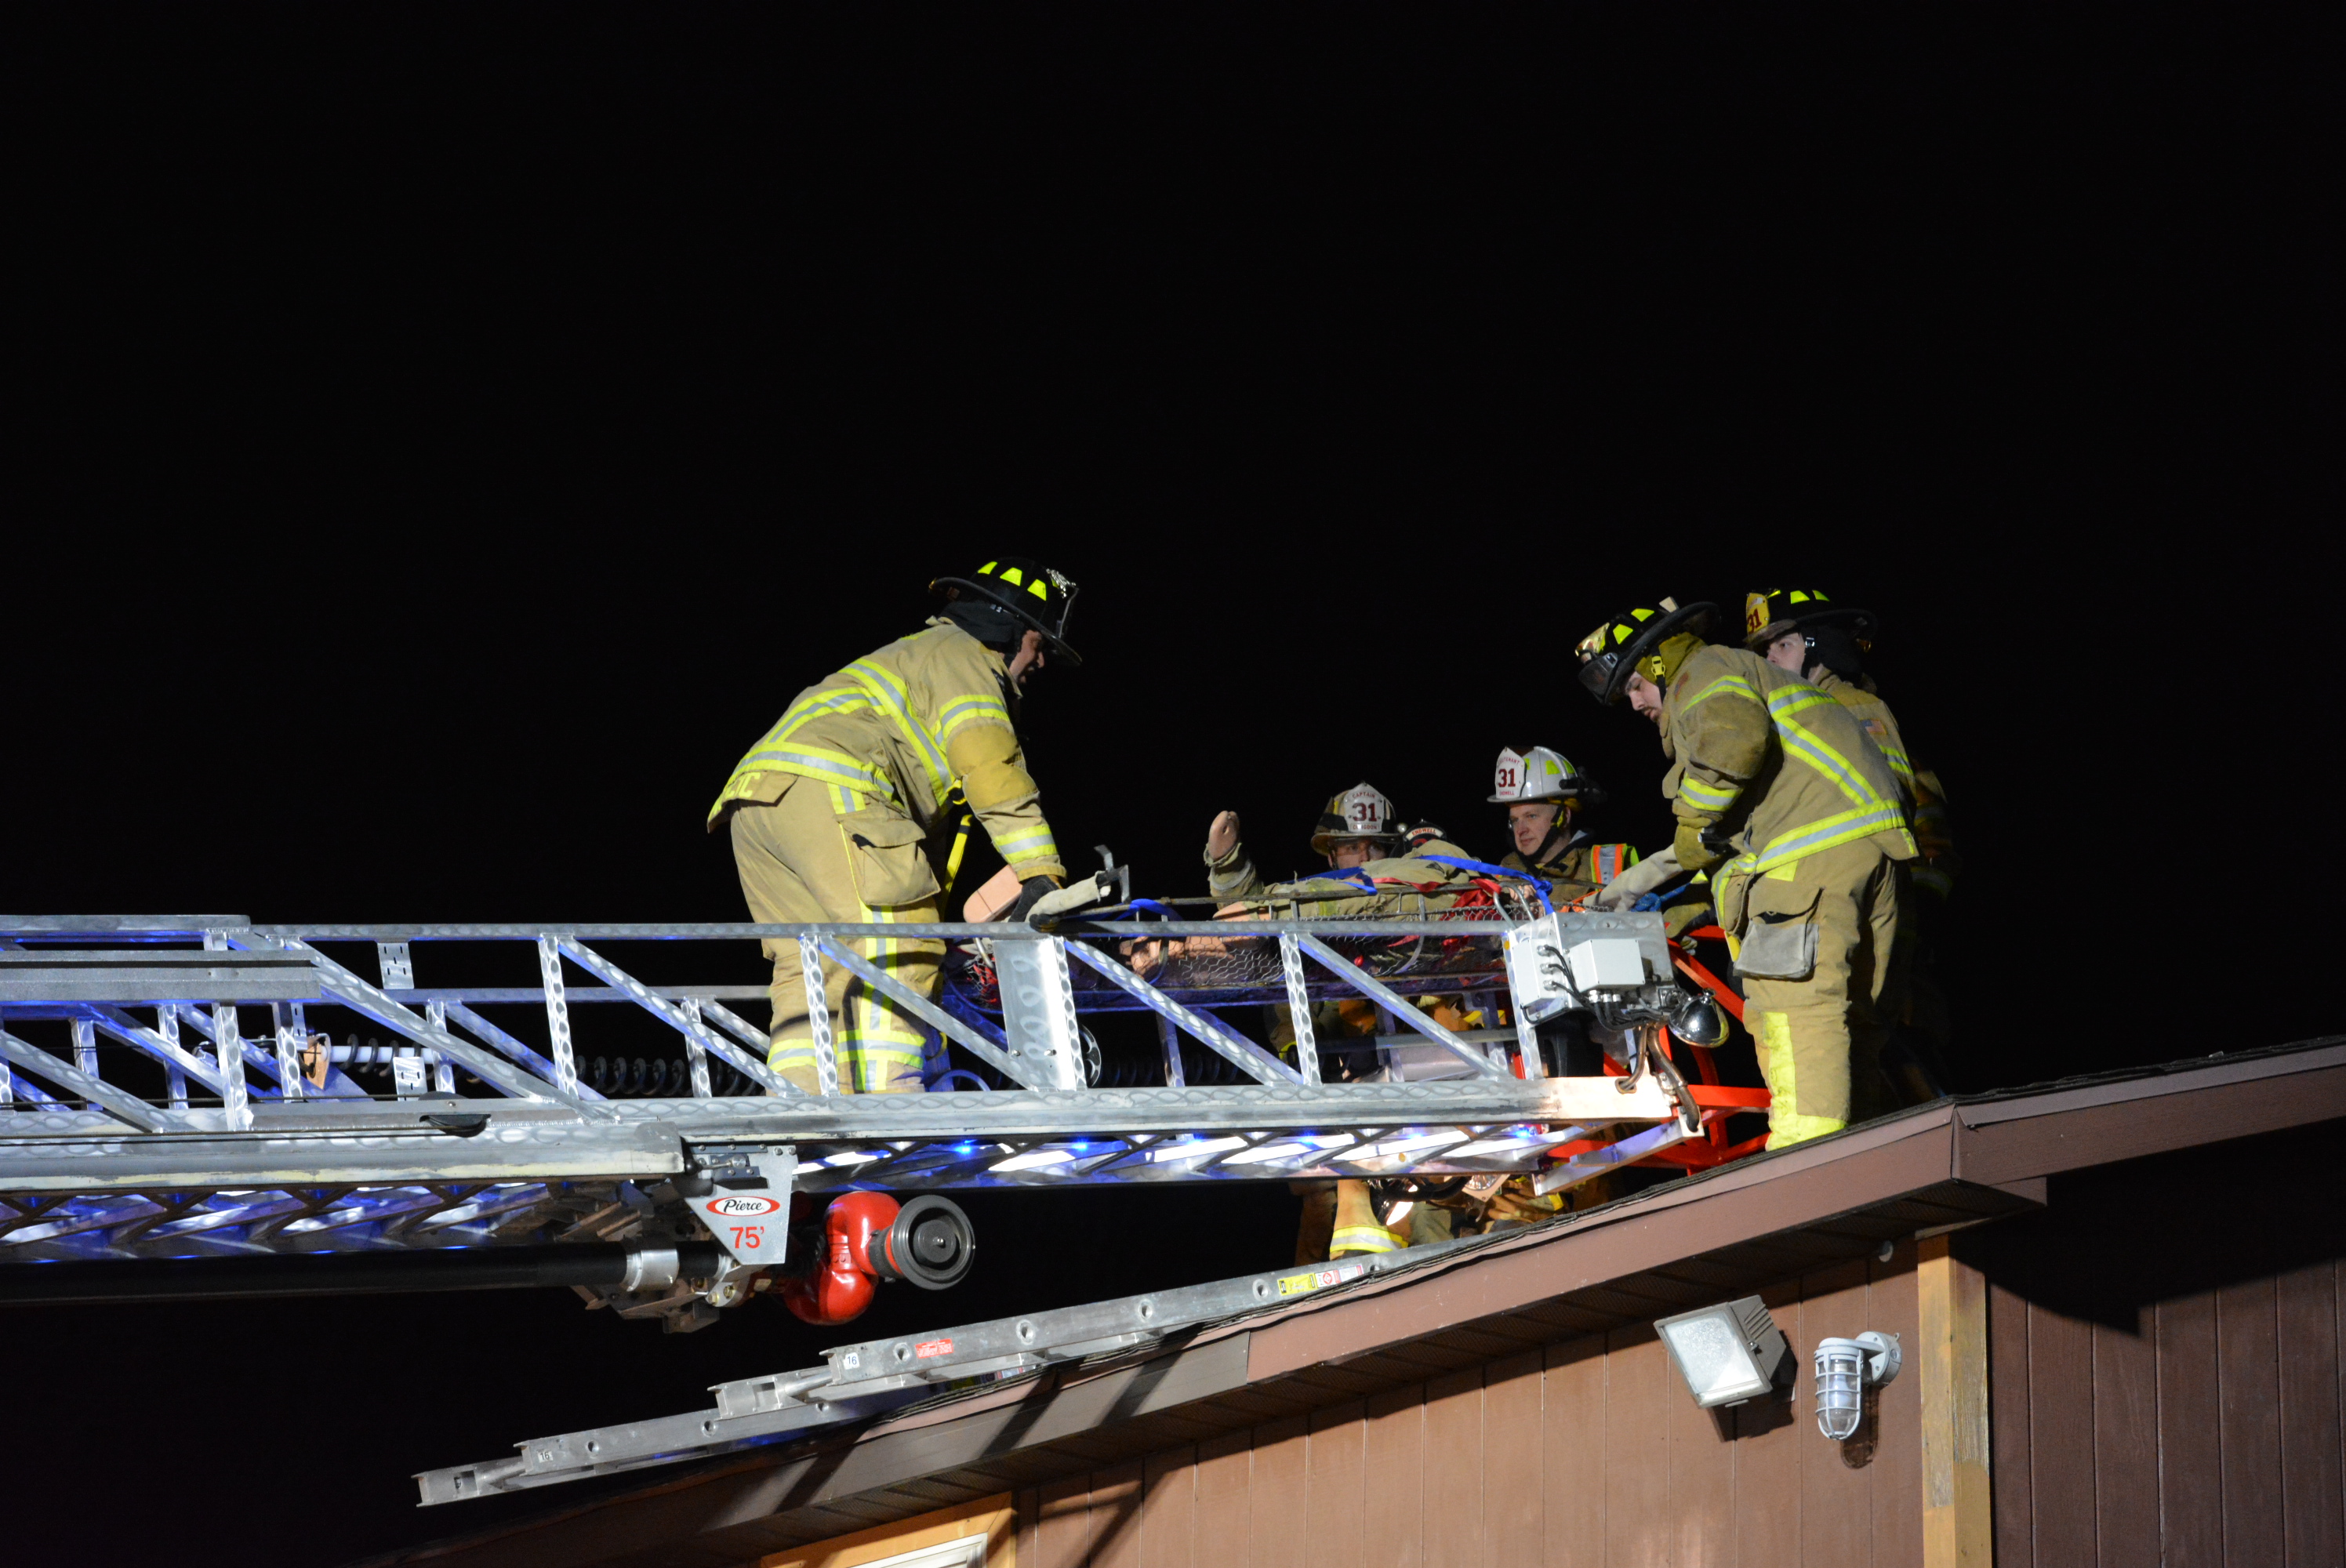 02-27-17  Training - Roof Rescue